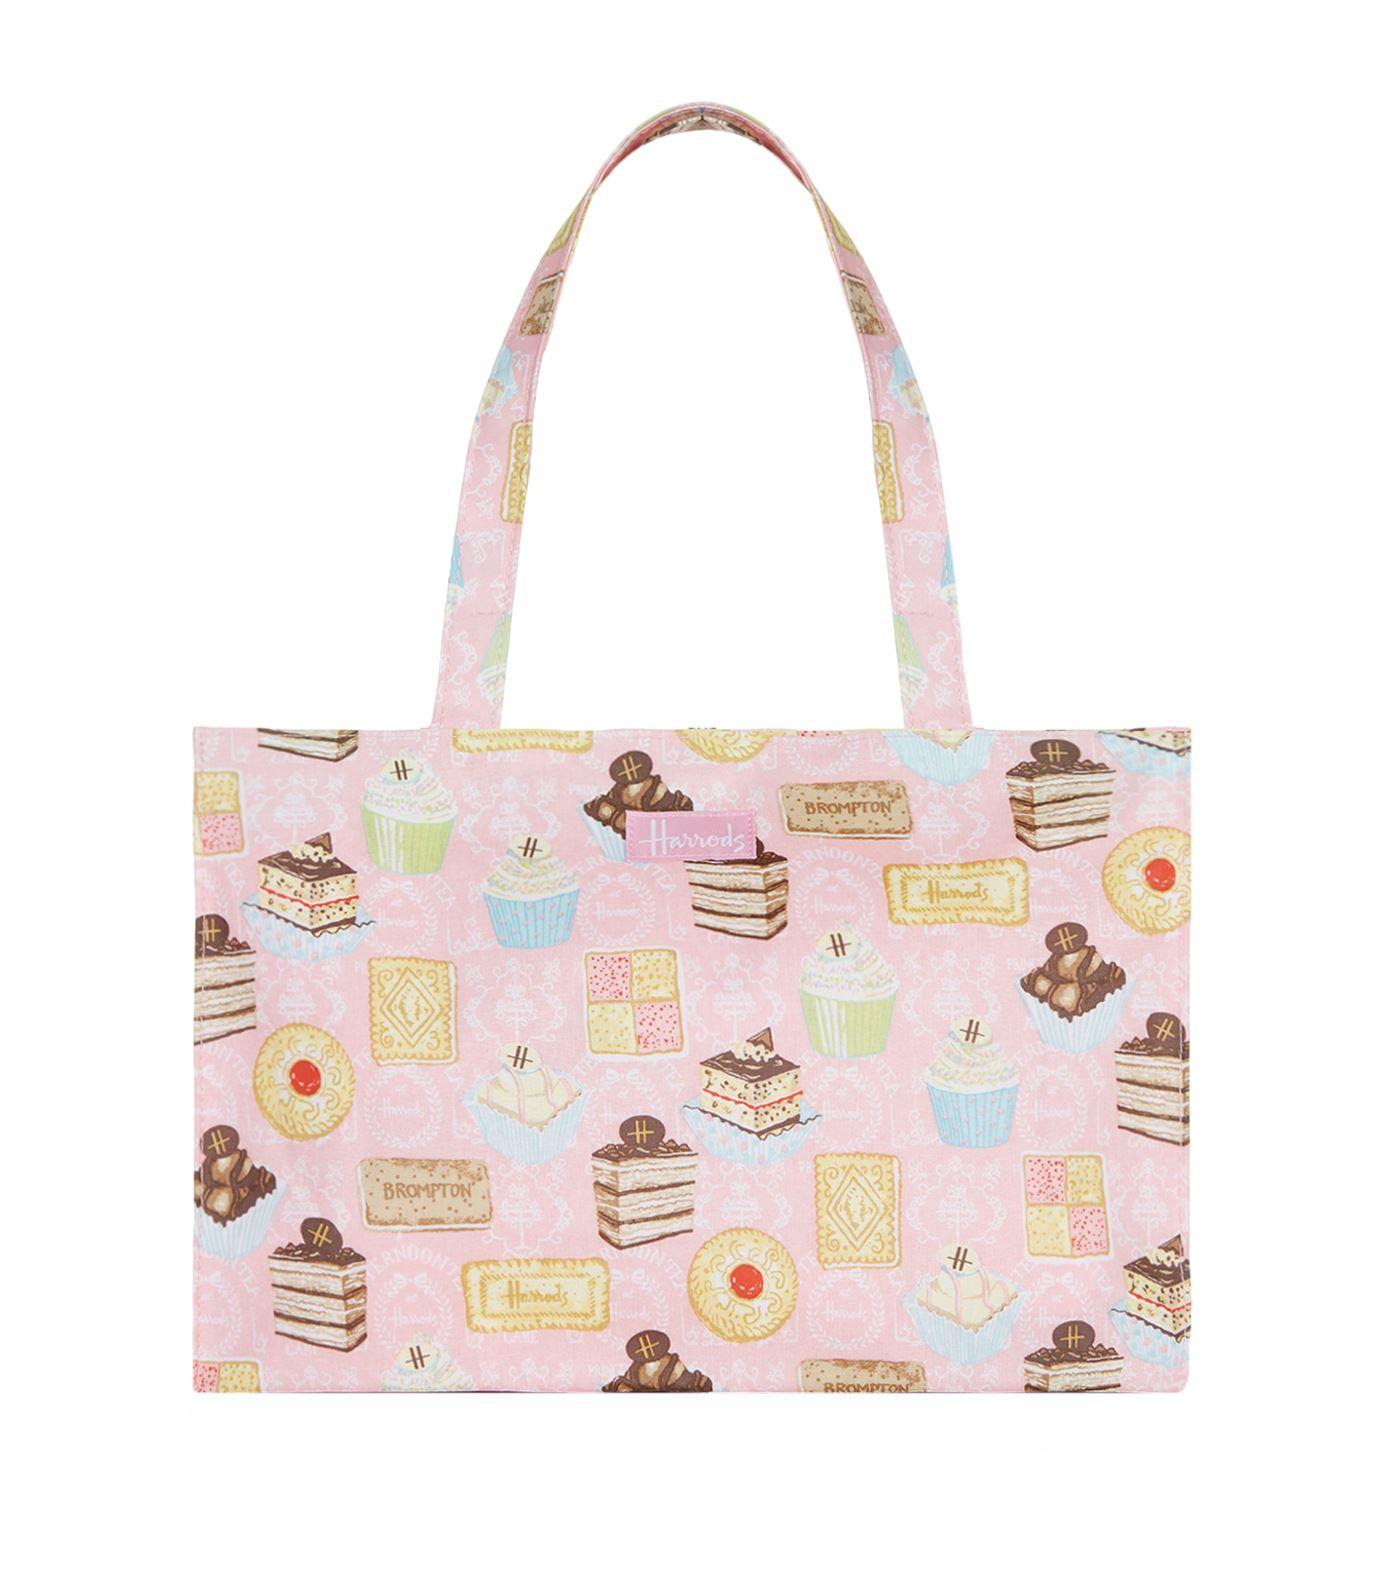 Harrods Cotton Afternoon Tea Shoulder Tote Bag in Pink - Lyst